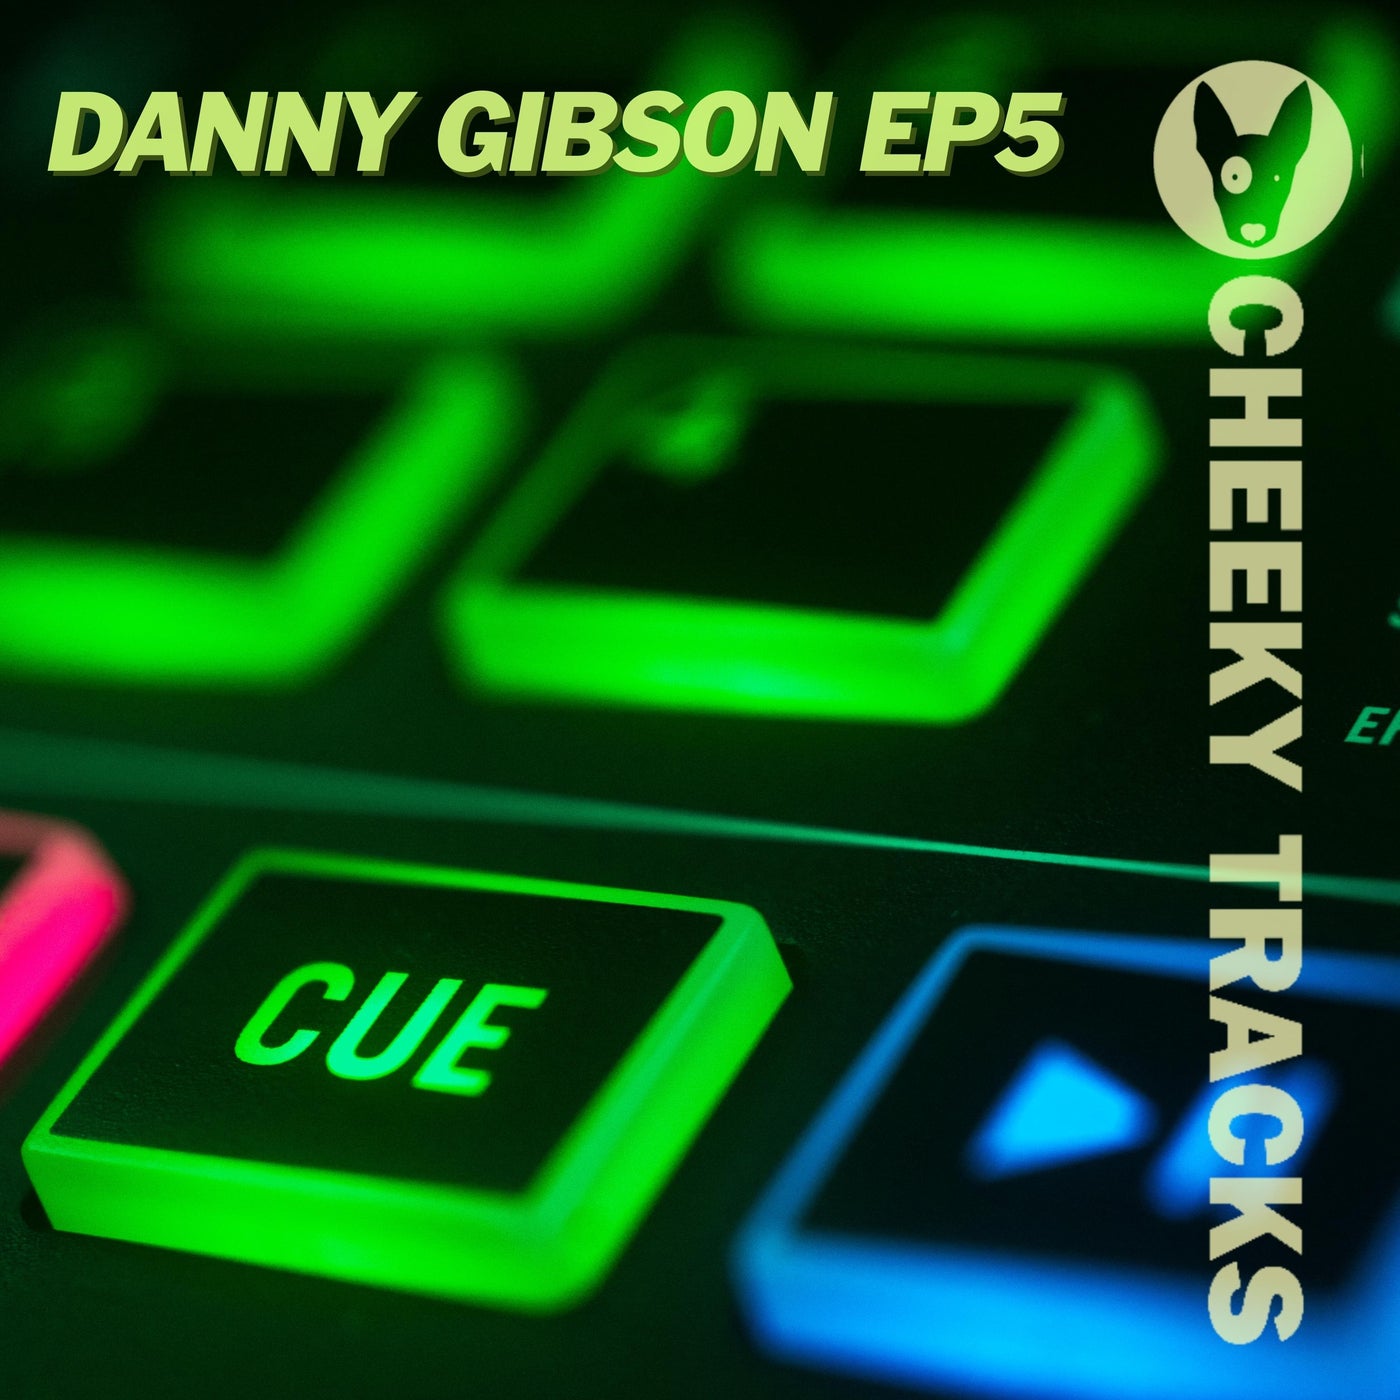 Danny Gibson EP5